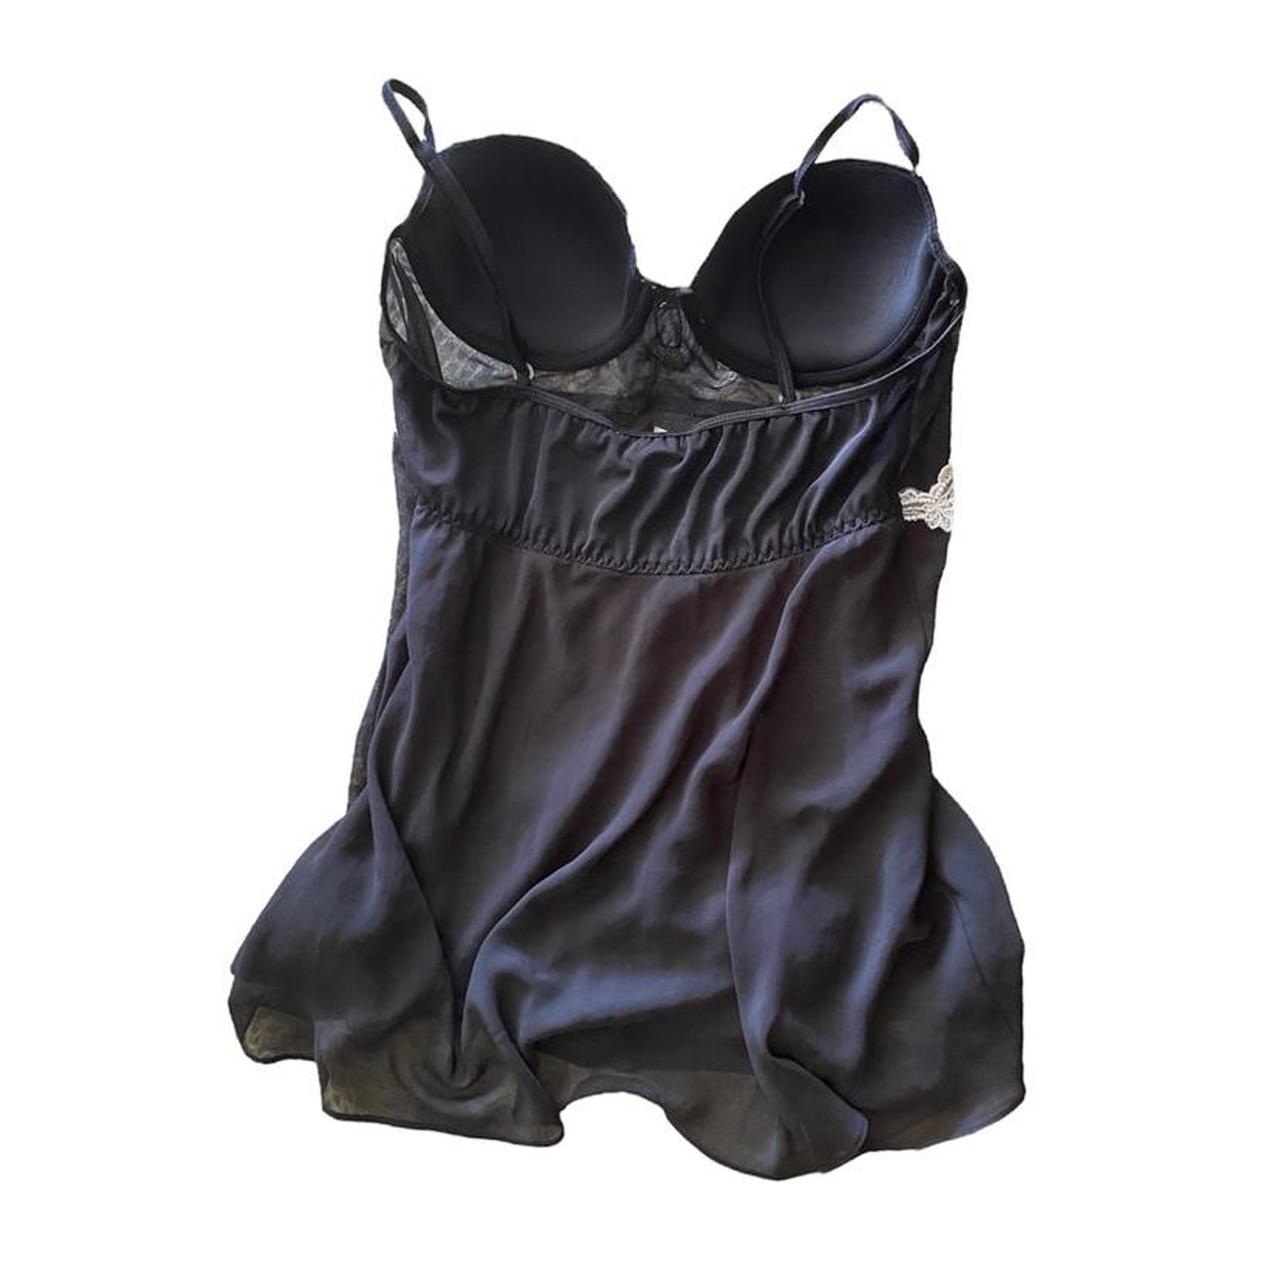 Linea Donatella Women's Black and White Vests-tanks-camis (4)